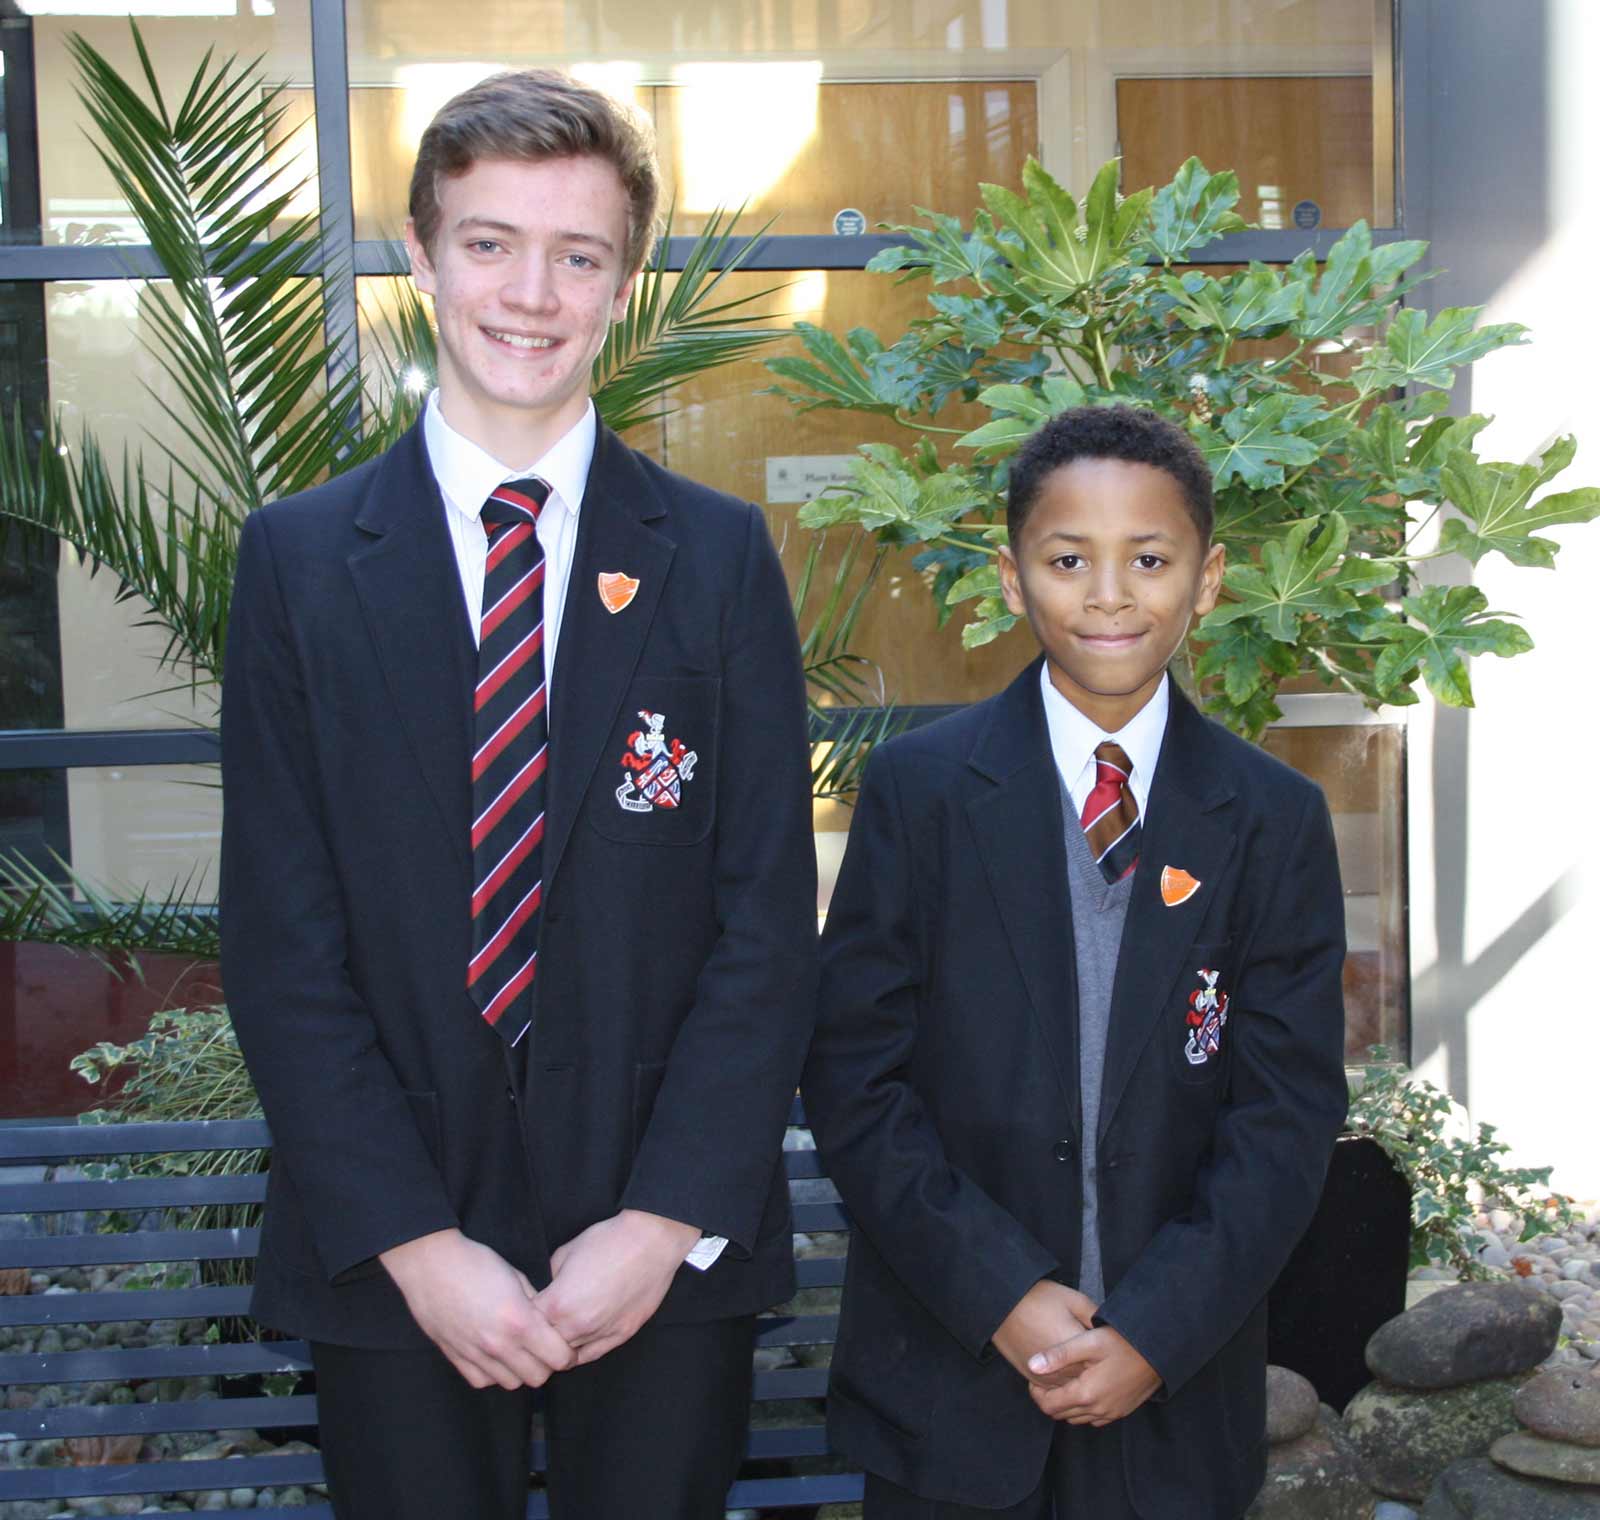 Harrogate Grammar School students Oliver Bean and Alexander Betts